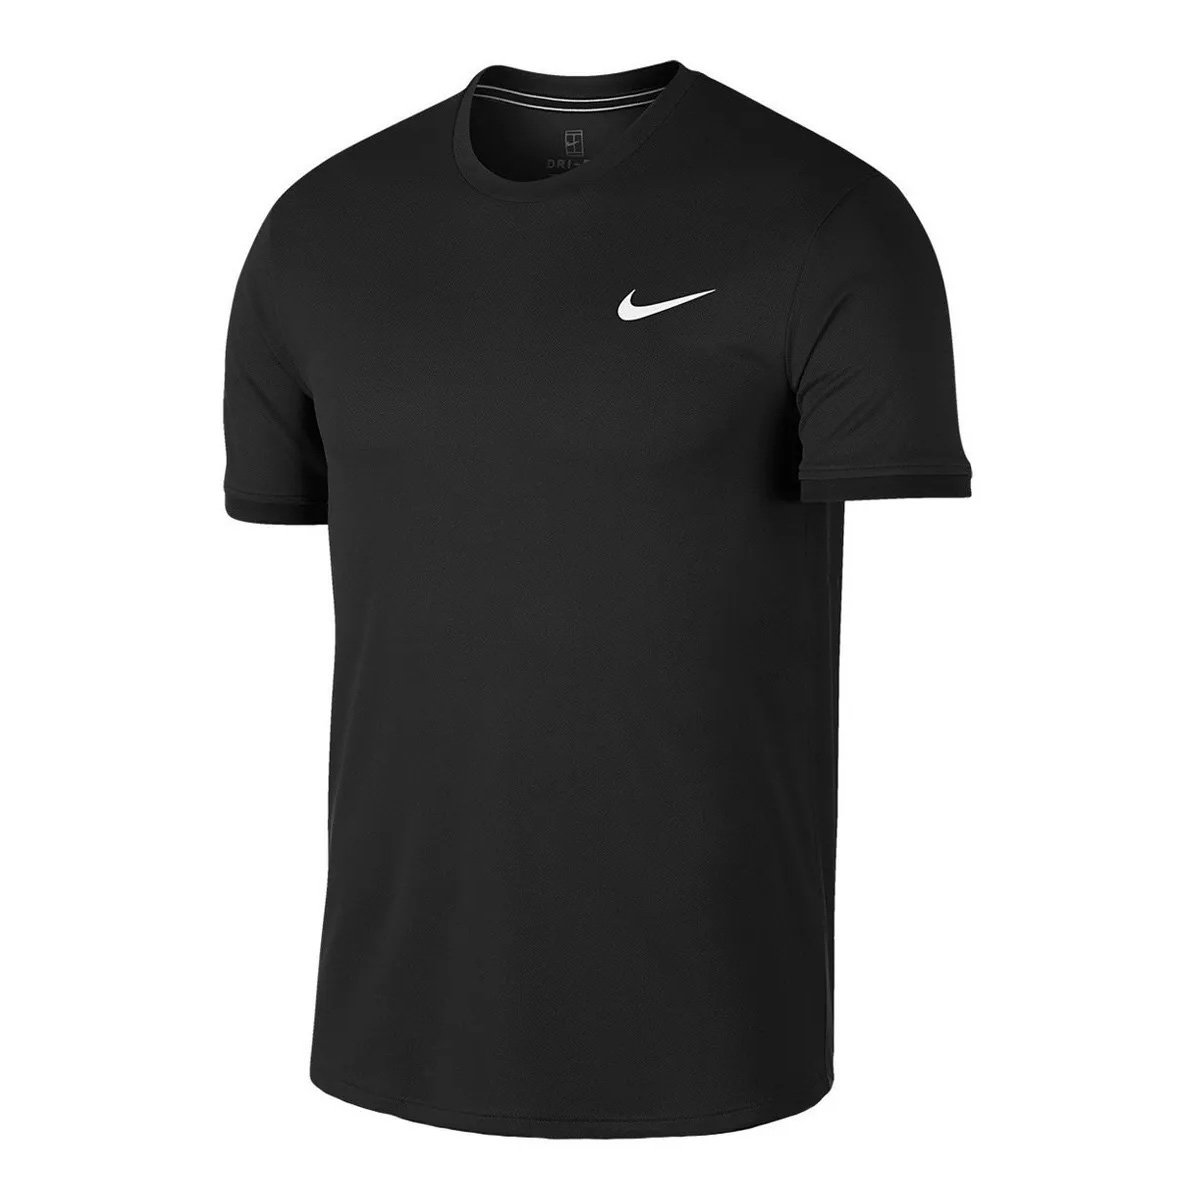 Camiseta Nike Dry Top Feminina - Empório do Tenista